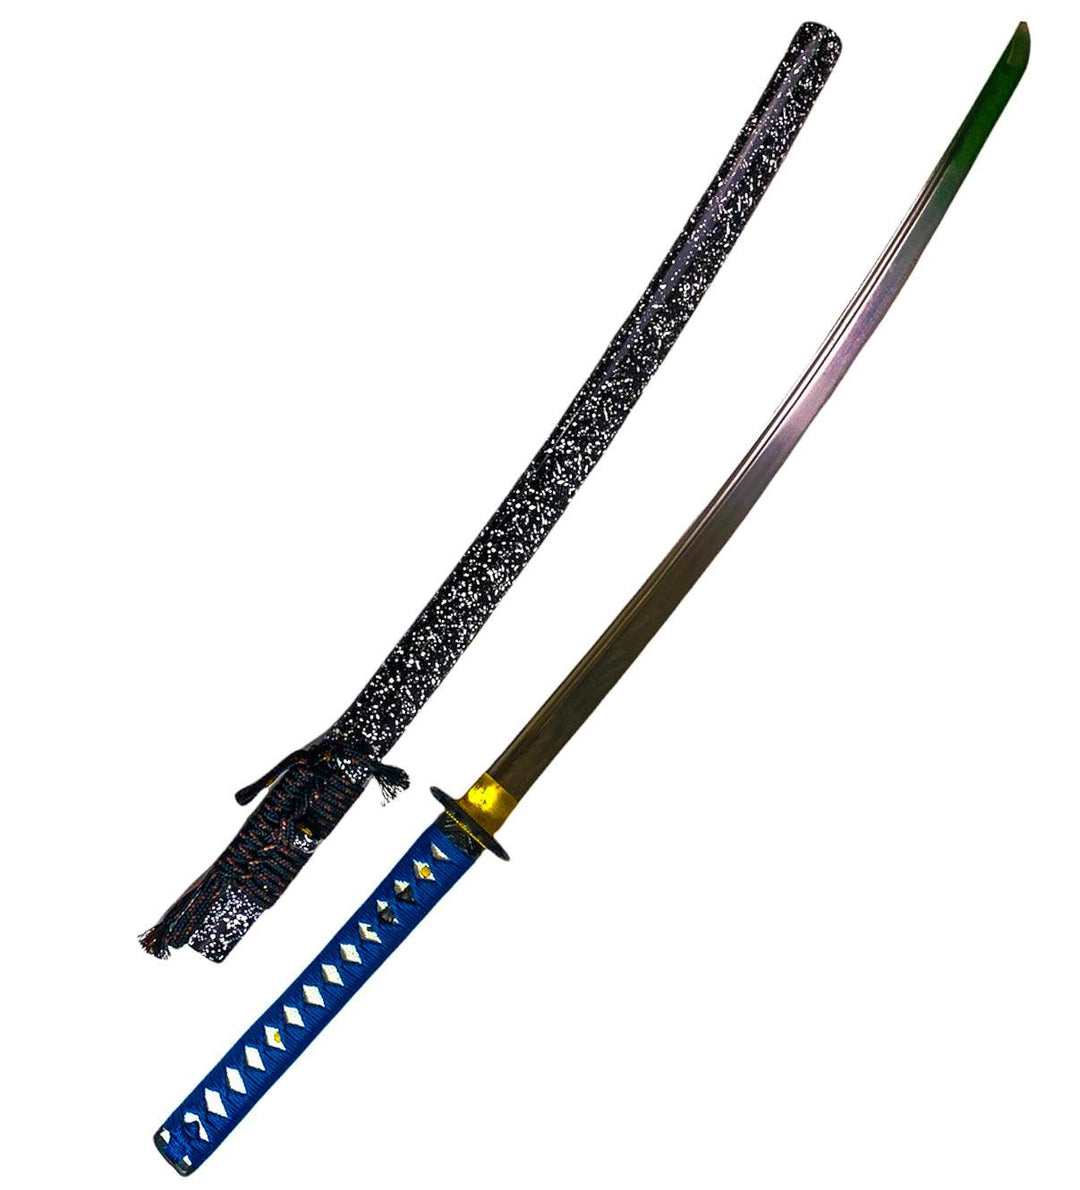 Blue Katana Sword- High Carbon 1095 Steel Sword with Clay Temper Blade - 40.5"